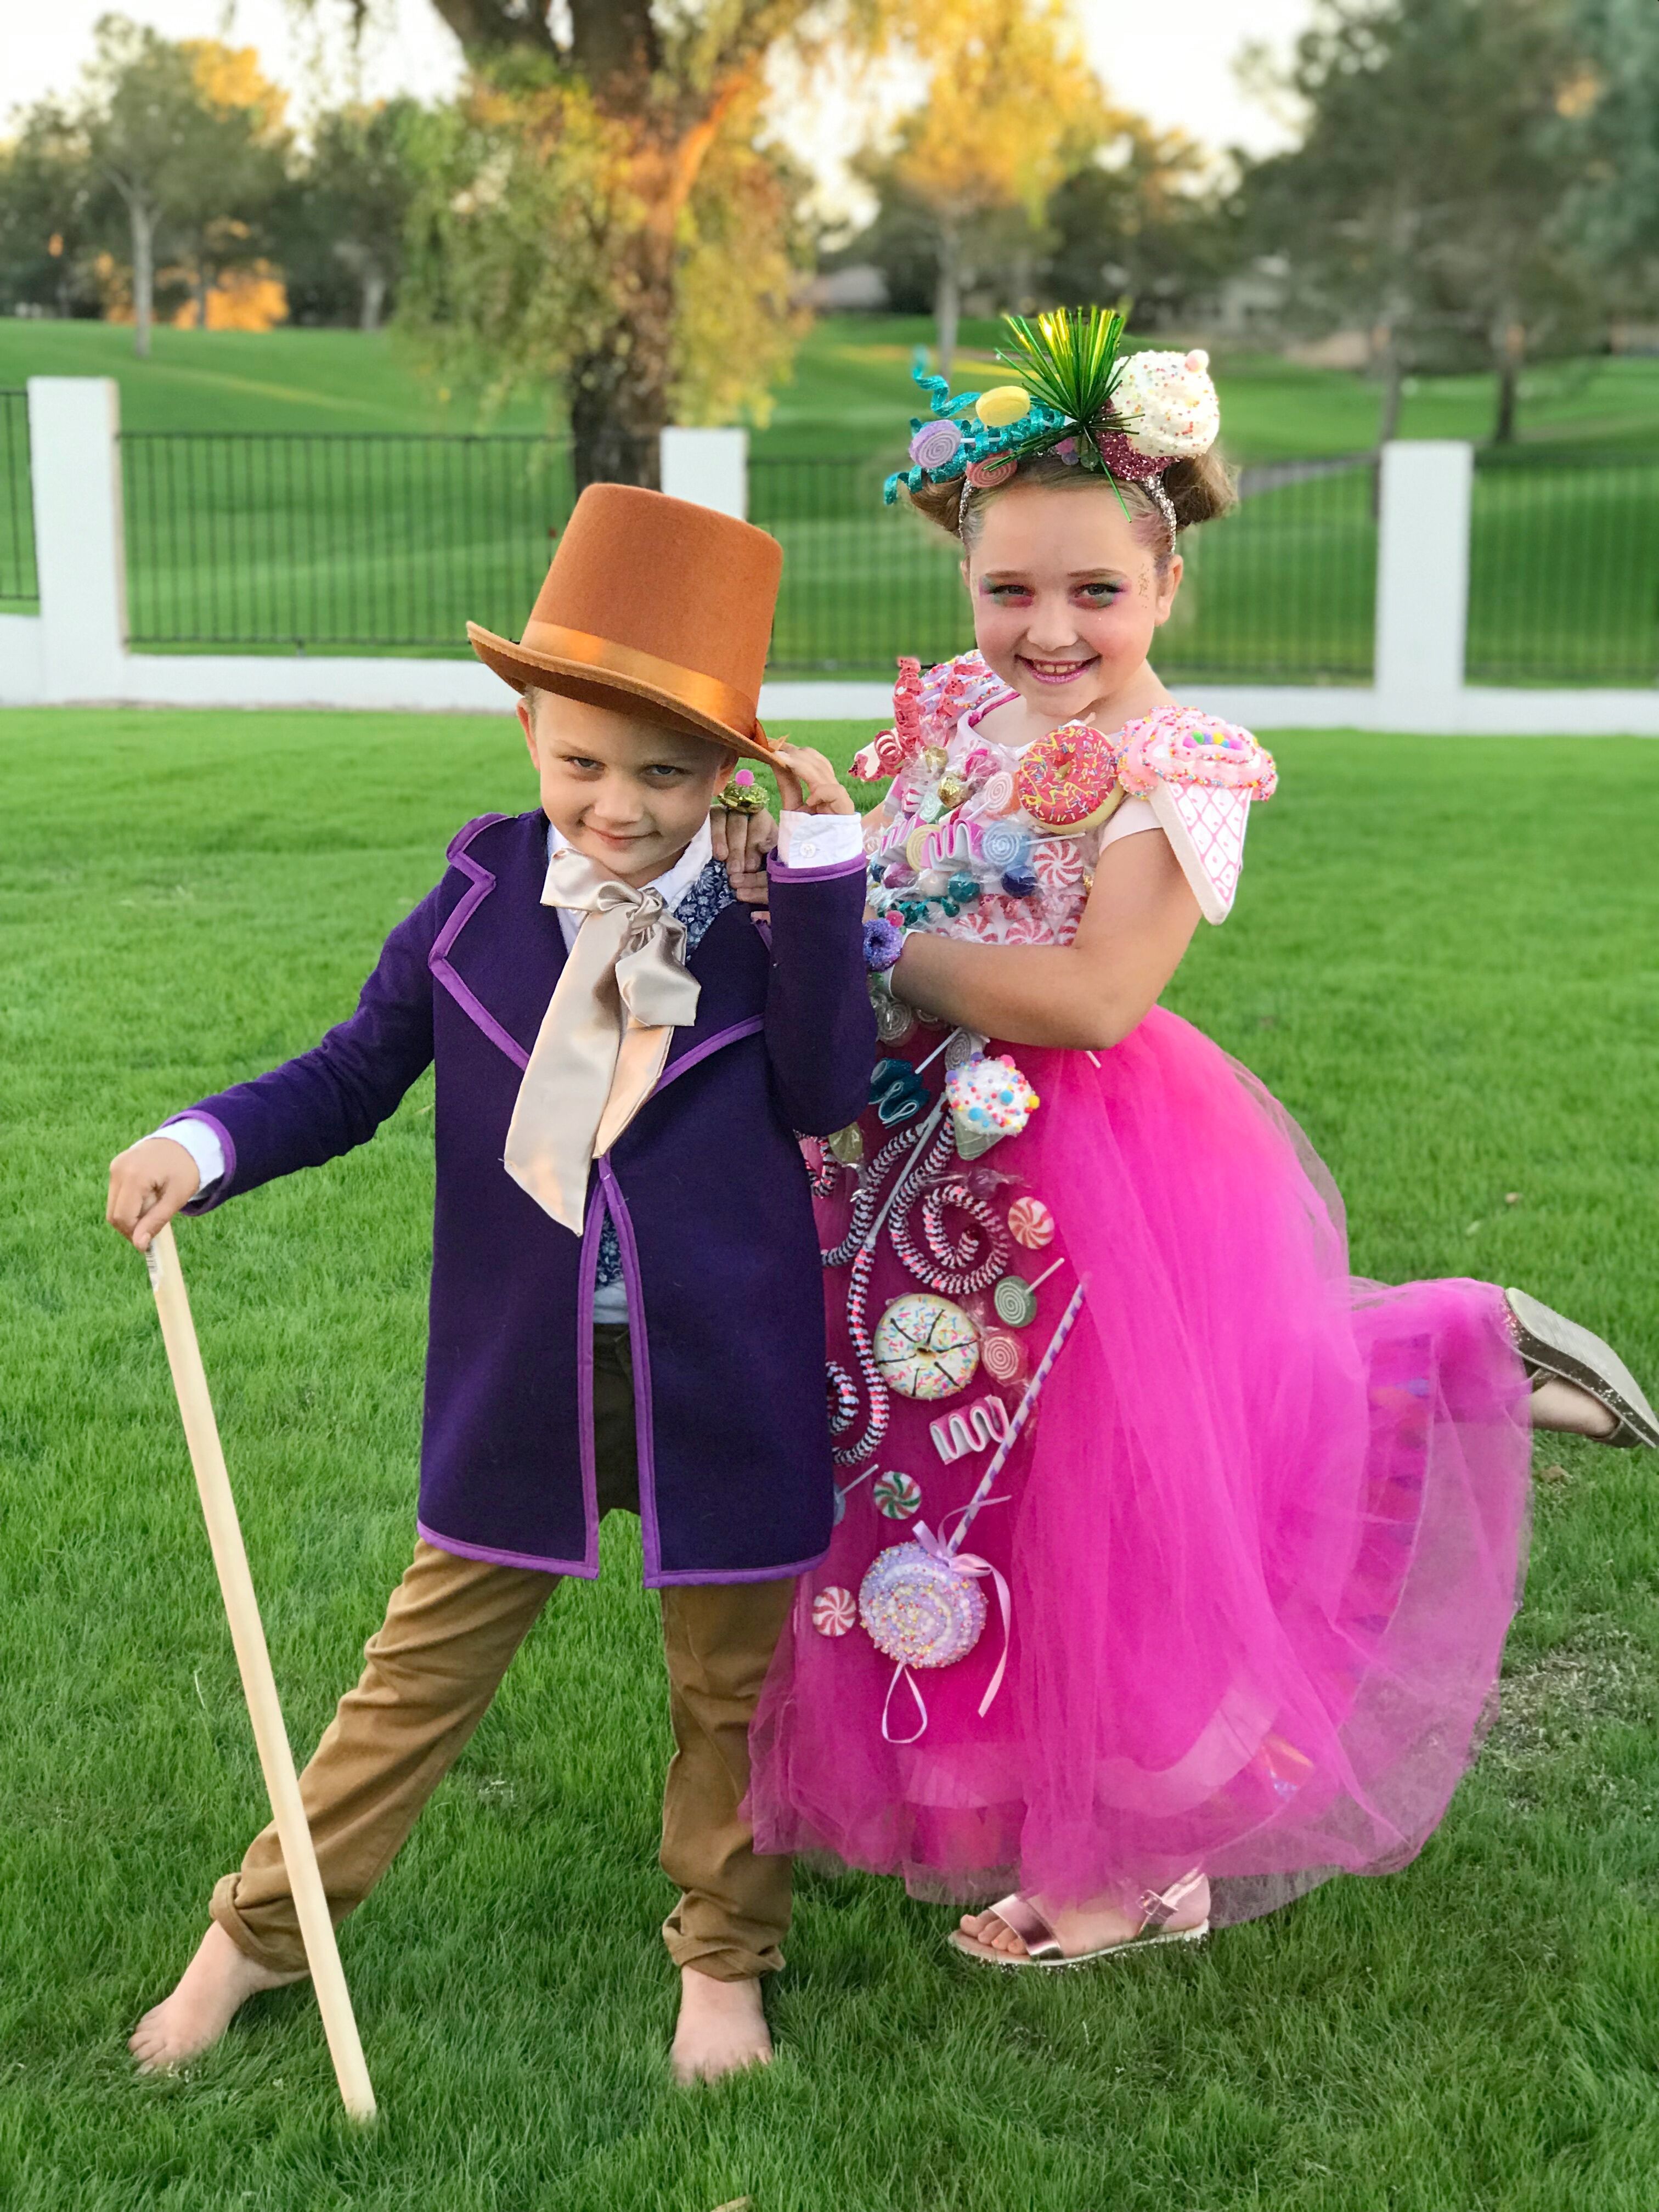 Childs Willy Wonka Book Week Costume